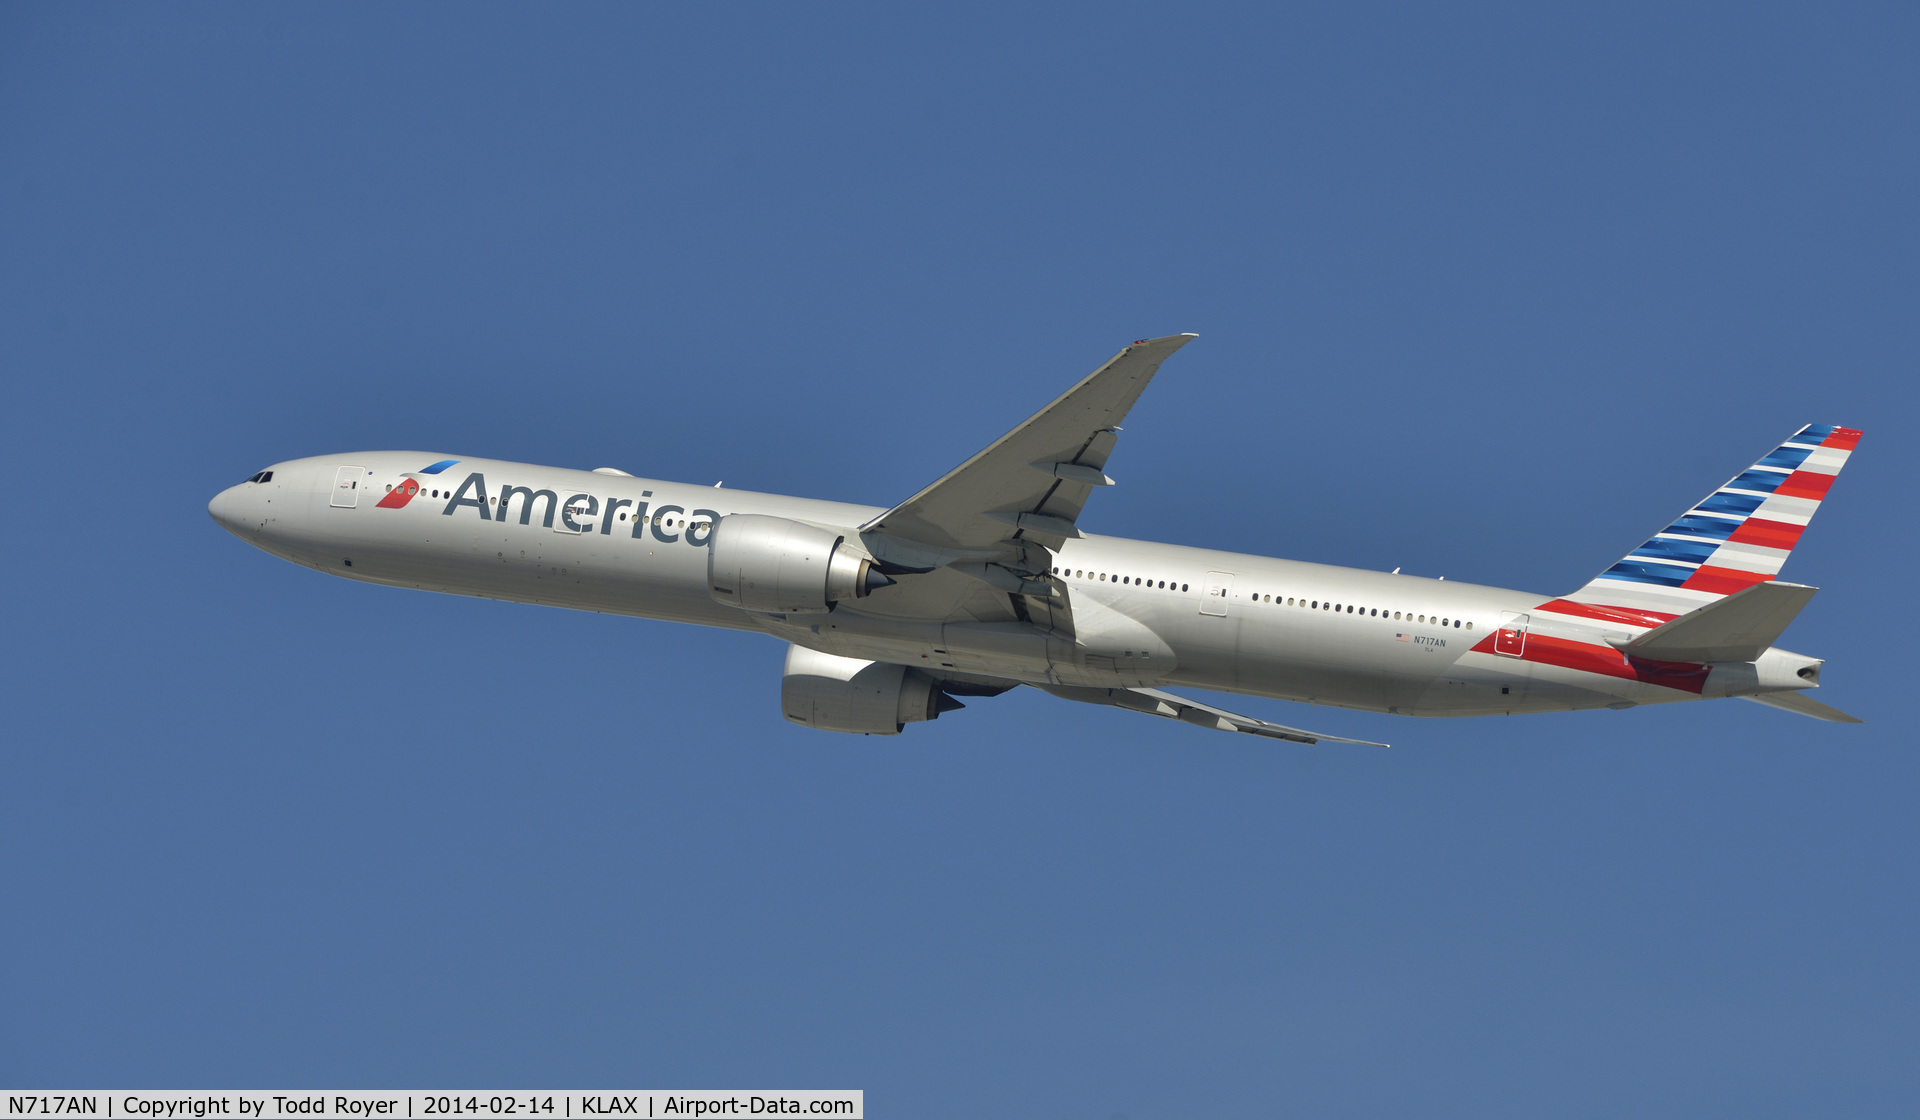 N717AN, 2012 Boeing 777-323/ER C/N 31543, Departing LAX on 25R